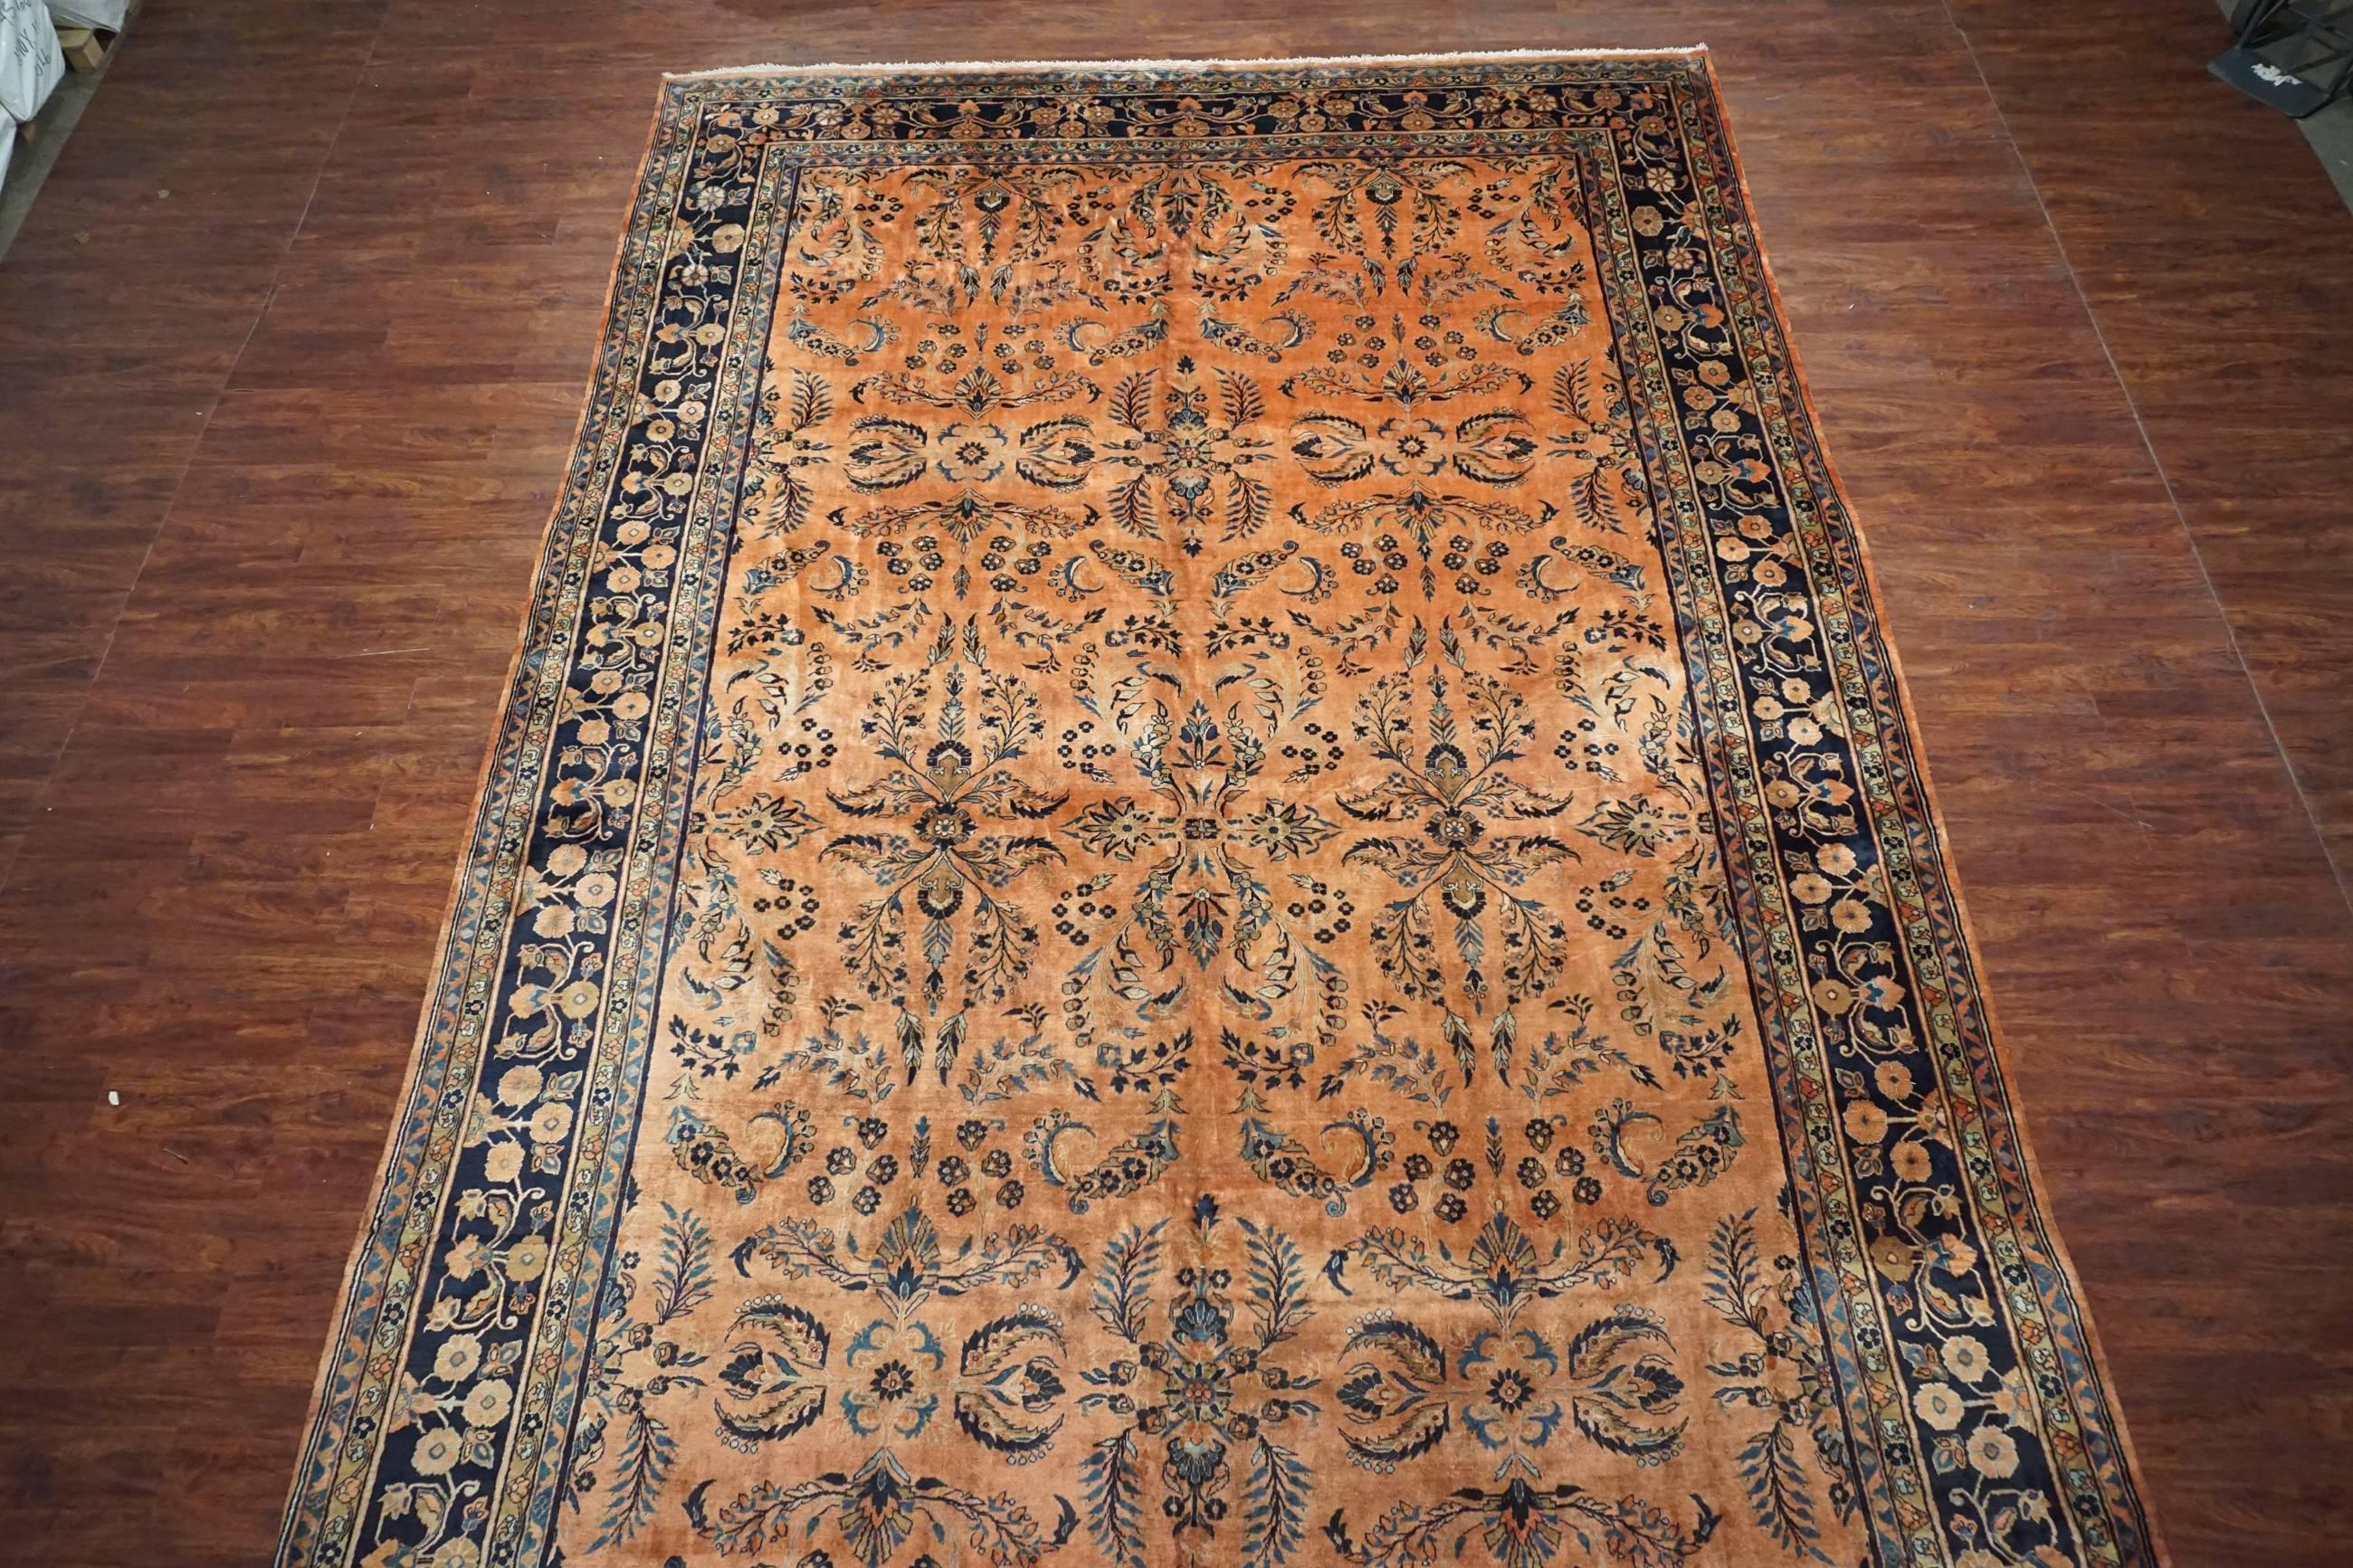 Antique Persian Sarouk rug

circa 1900

Measures: 11' 5